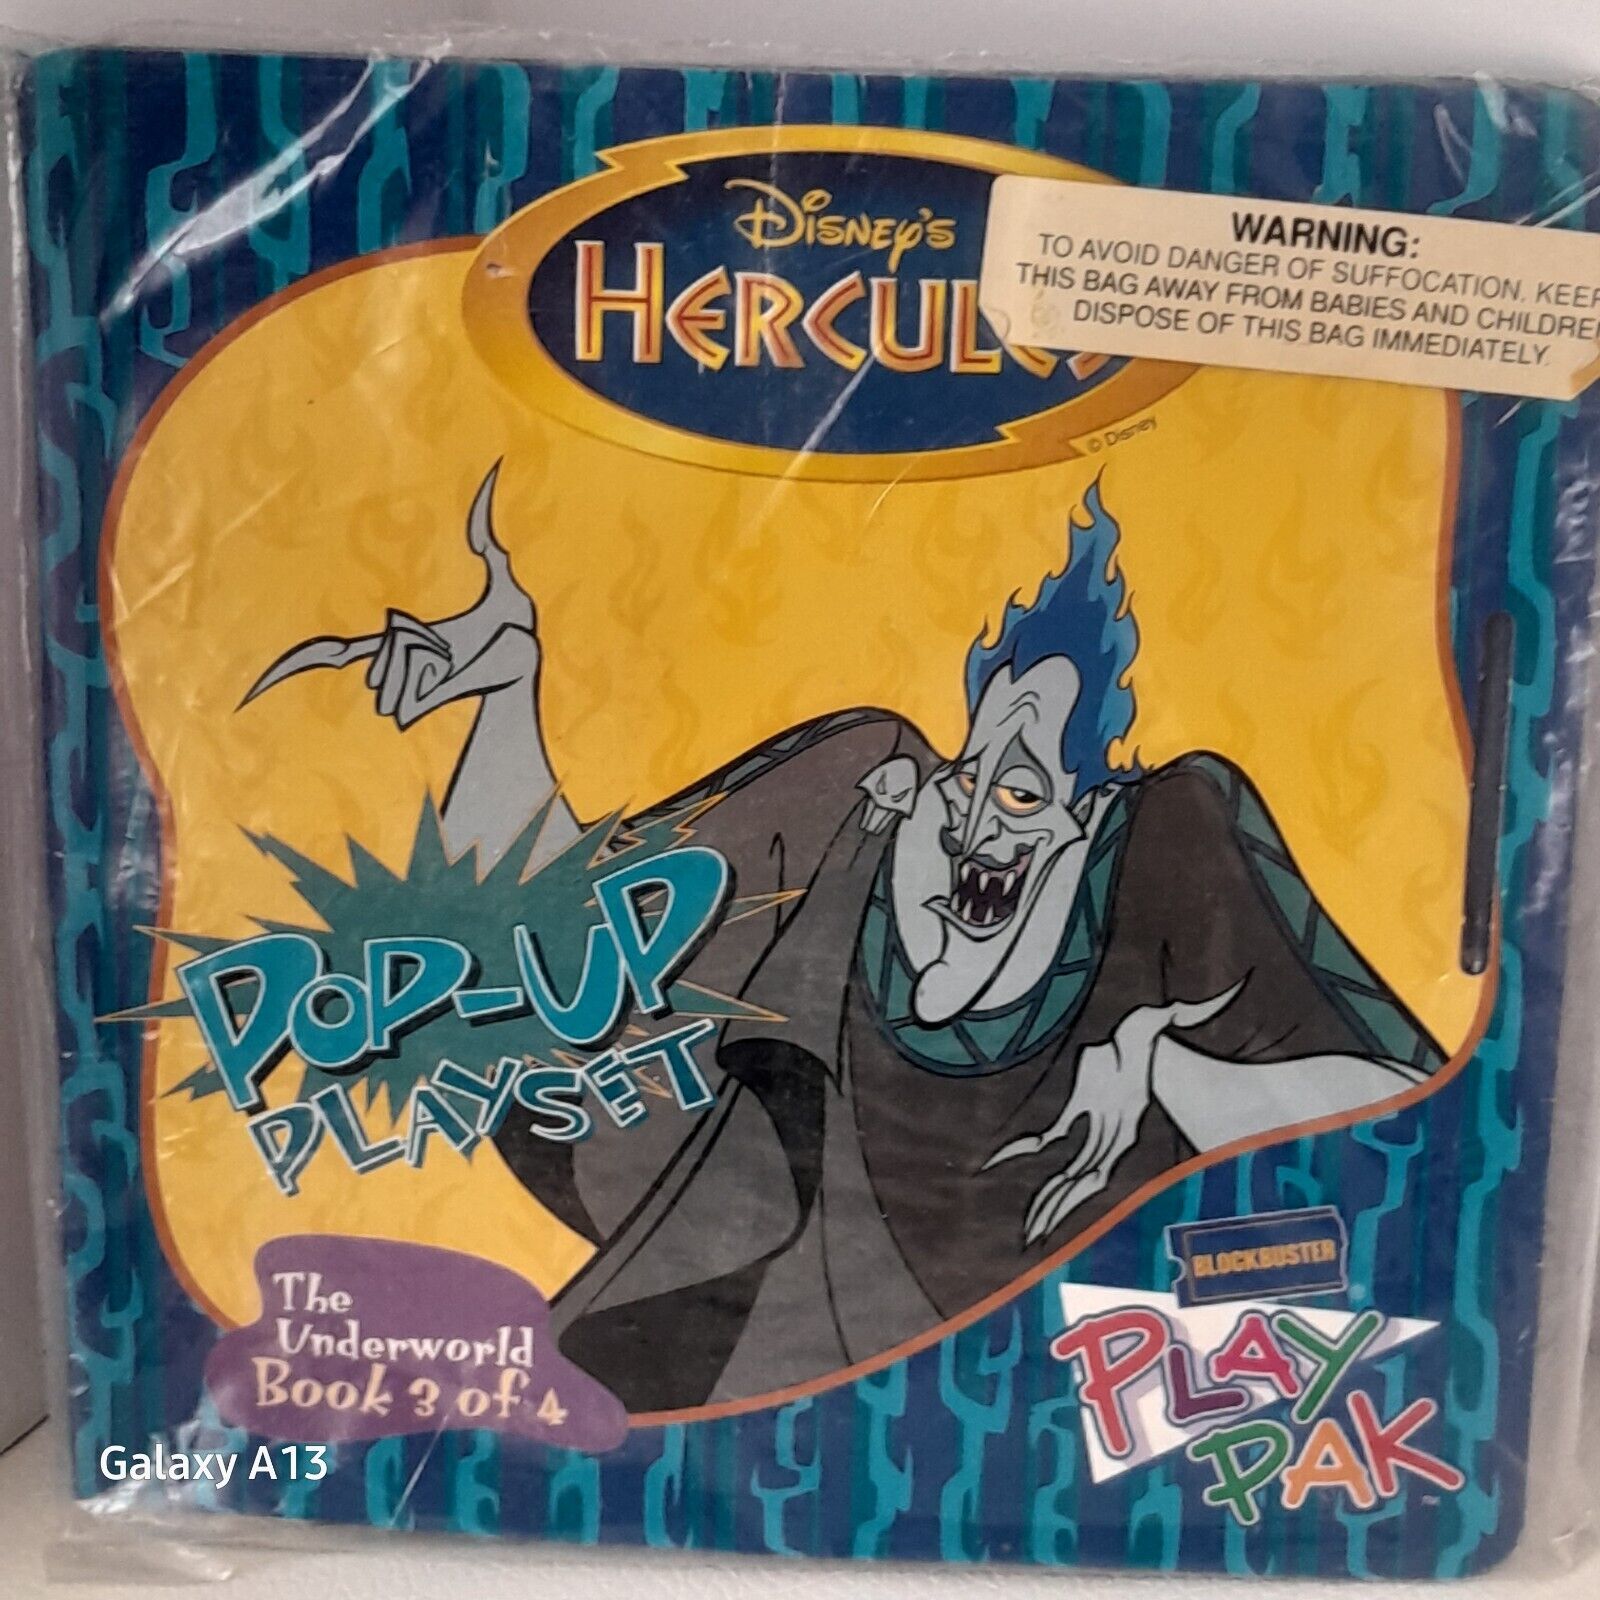 Blockbuster Hercules Play Pop-Up Playset The Underworld Book 3 Of 4 Vintage